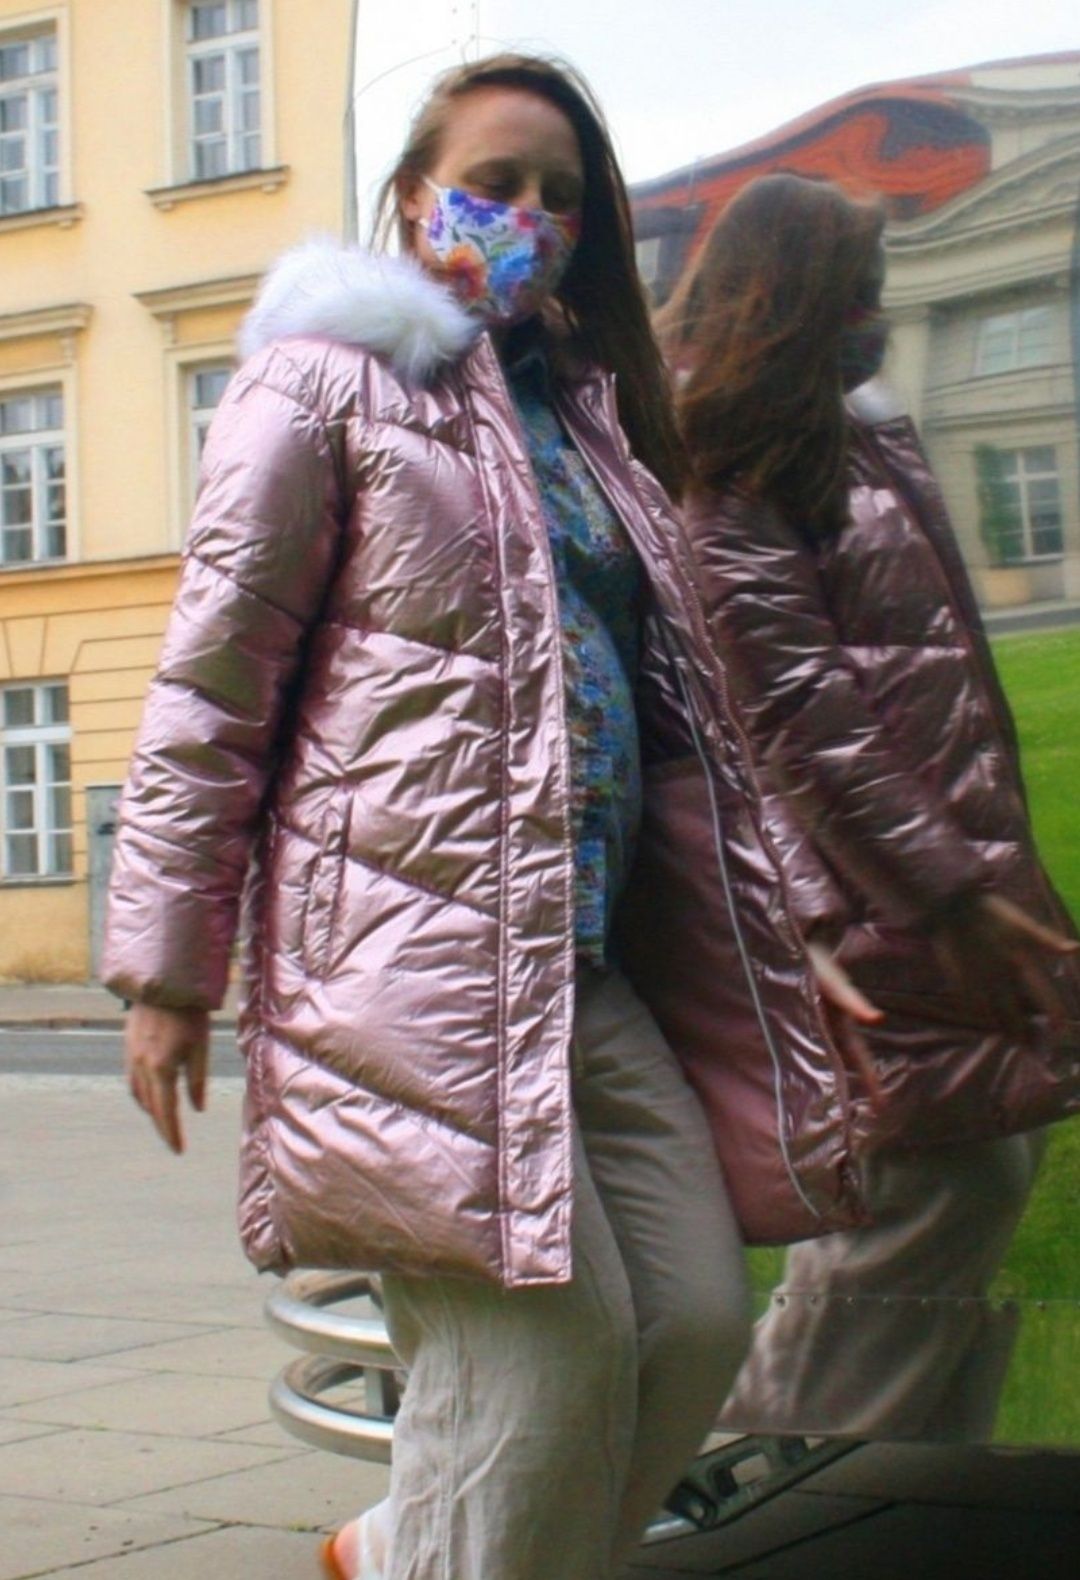 Reserved Metaliczna holograficzna neon puchowa zimowa kurtka 34 xs